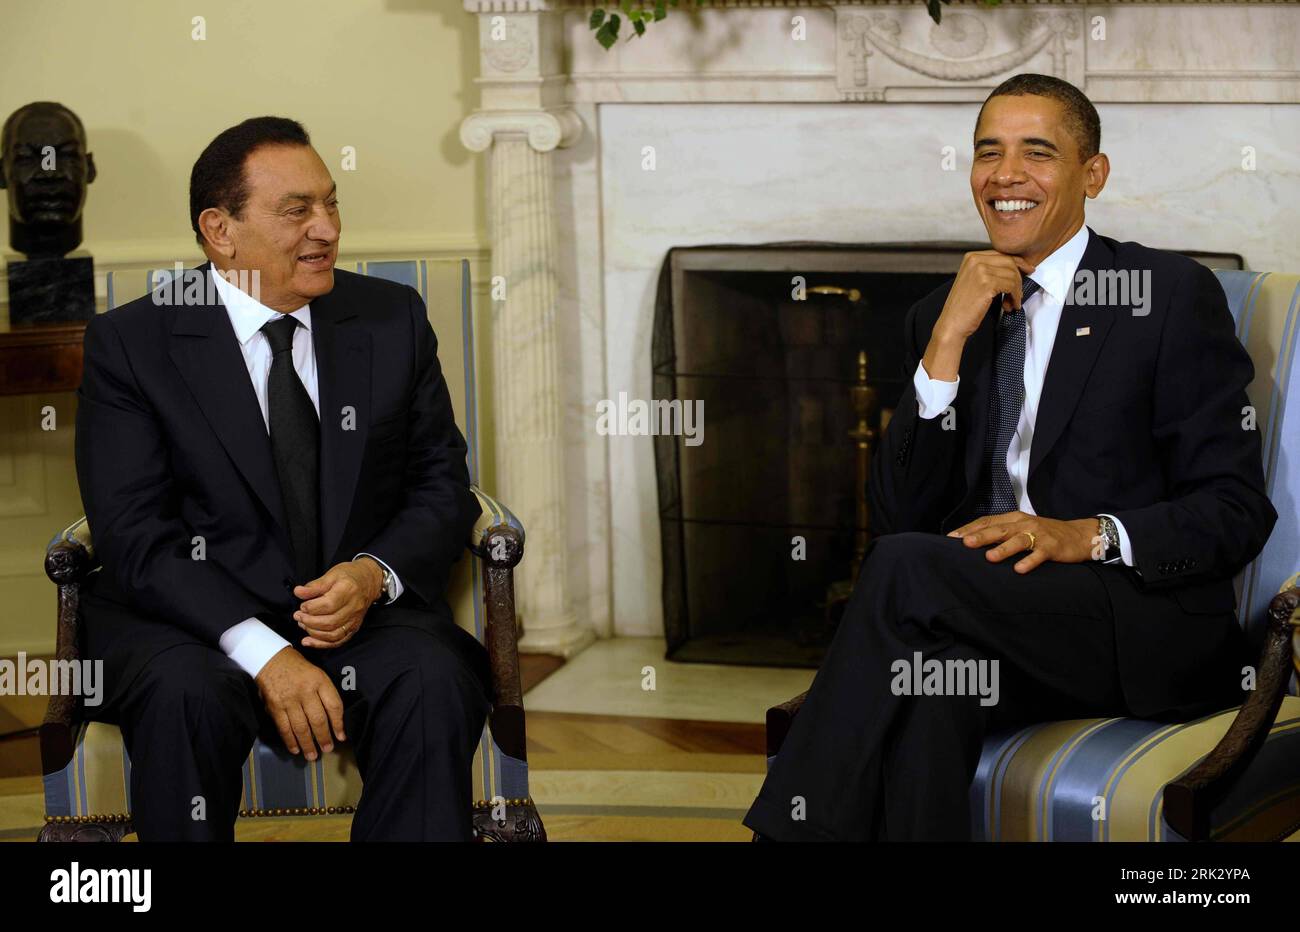 Bildnummer: 53270657  Datum: 18.08.2009  Copyright: imago/Xinhua (090819) -- WASHINGTON, Aug. 19, 2009 (Xinhua) -- U.S. President Barack Obama (R) meets with Egyptian President Hosni Mubarak  in Washington, U.S., Aug. 18, 2009. (Xinhua/Zhang Yan) (yc) (2)US-EGYPT-PRESIDENT-MEET  PUBLICATIONxNOTxINxCHN  People Politik Premiumd kbdig xub  2009 quer  o0 USA, Ägypten    Bildnummer 53270657 Date 18 08 2009 Copyright Imago XINHUA 090819 Washington Aug 19 2009 XINHUA U S President Barack Obama r Meets With Egyptian President Hosni Mubarak in Washington U S Aug 18 2009 XINHUA Zhang Yan  2 U.S. Egypt P Stock Photo